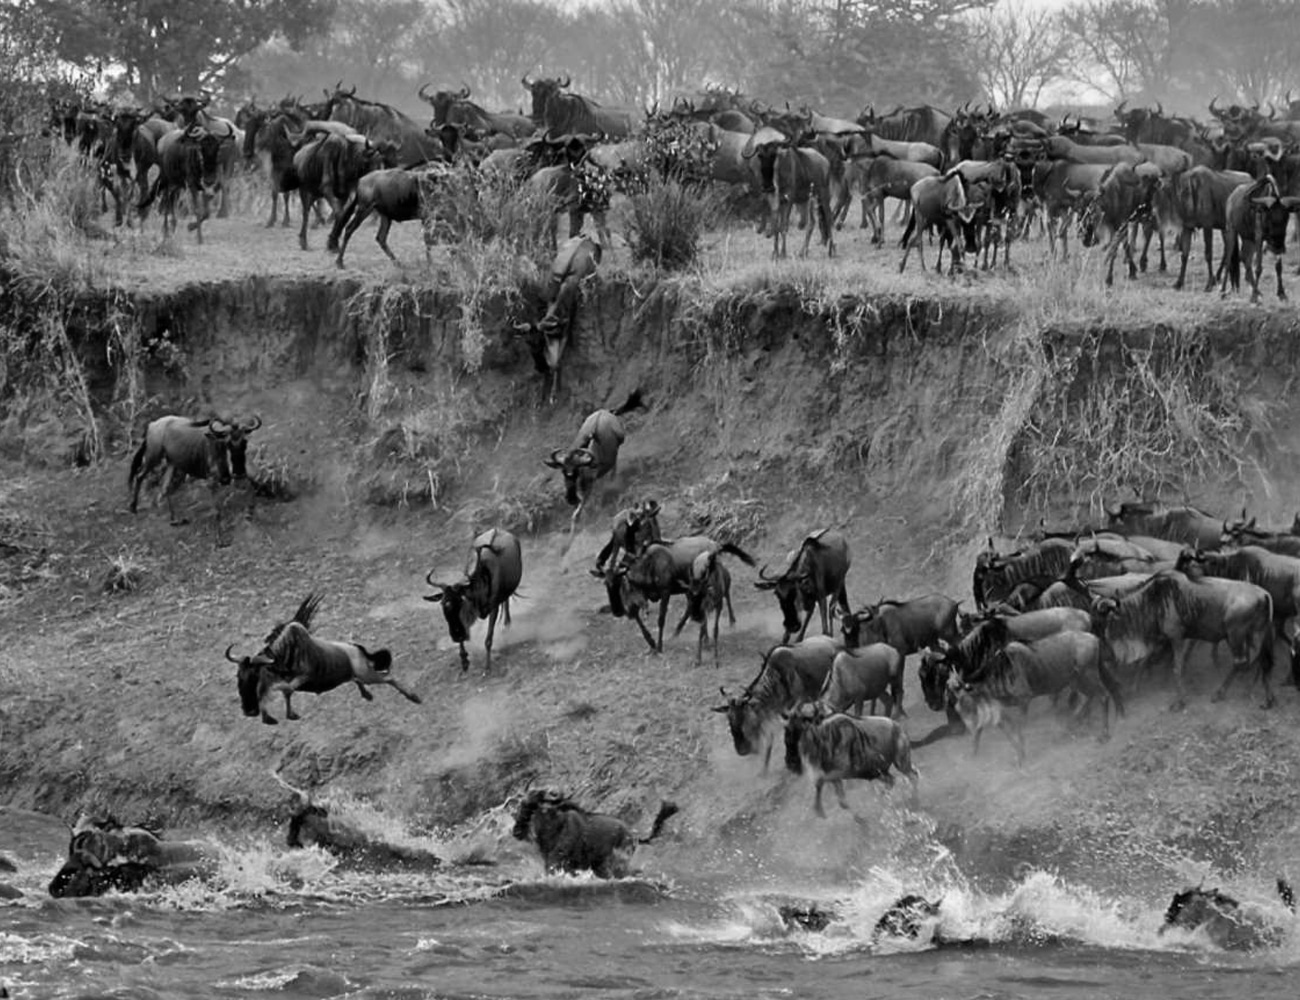 The Annual Wildebeest Migration